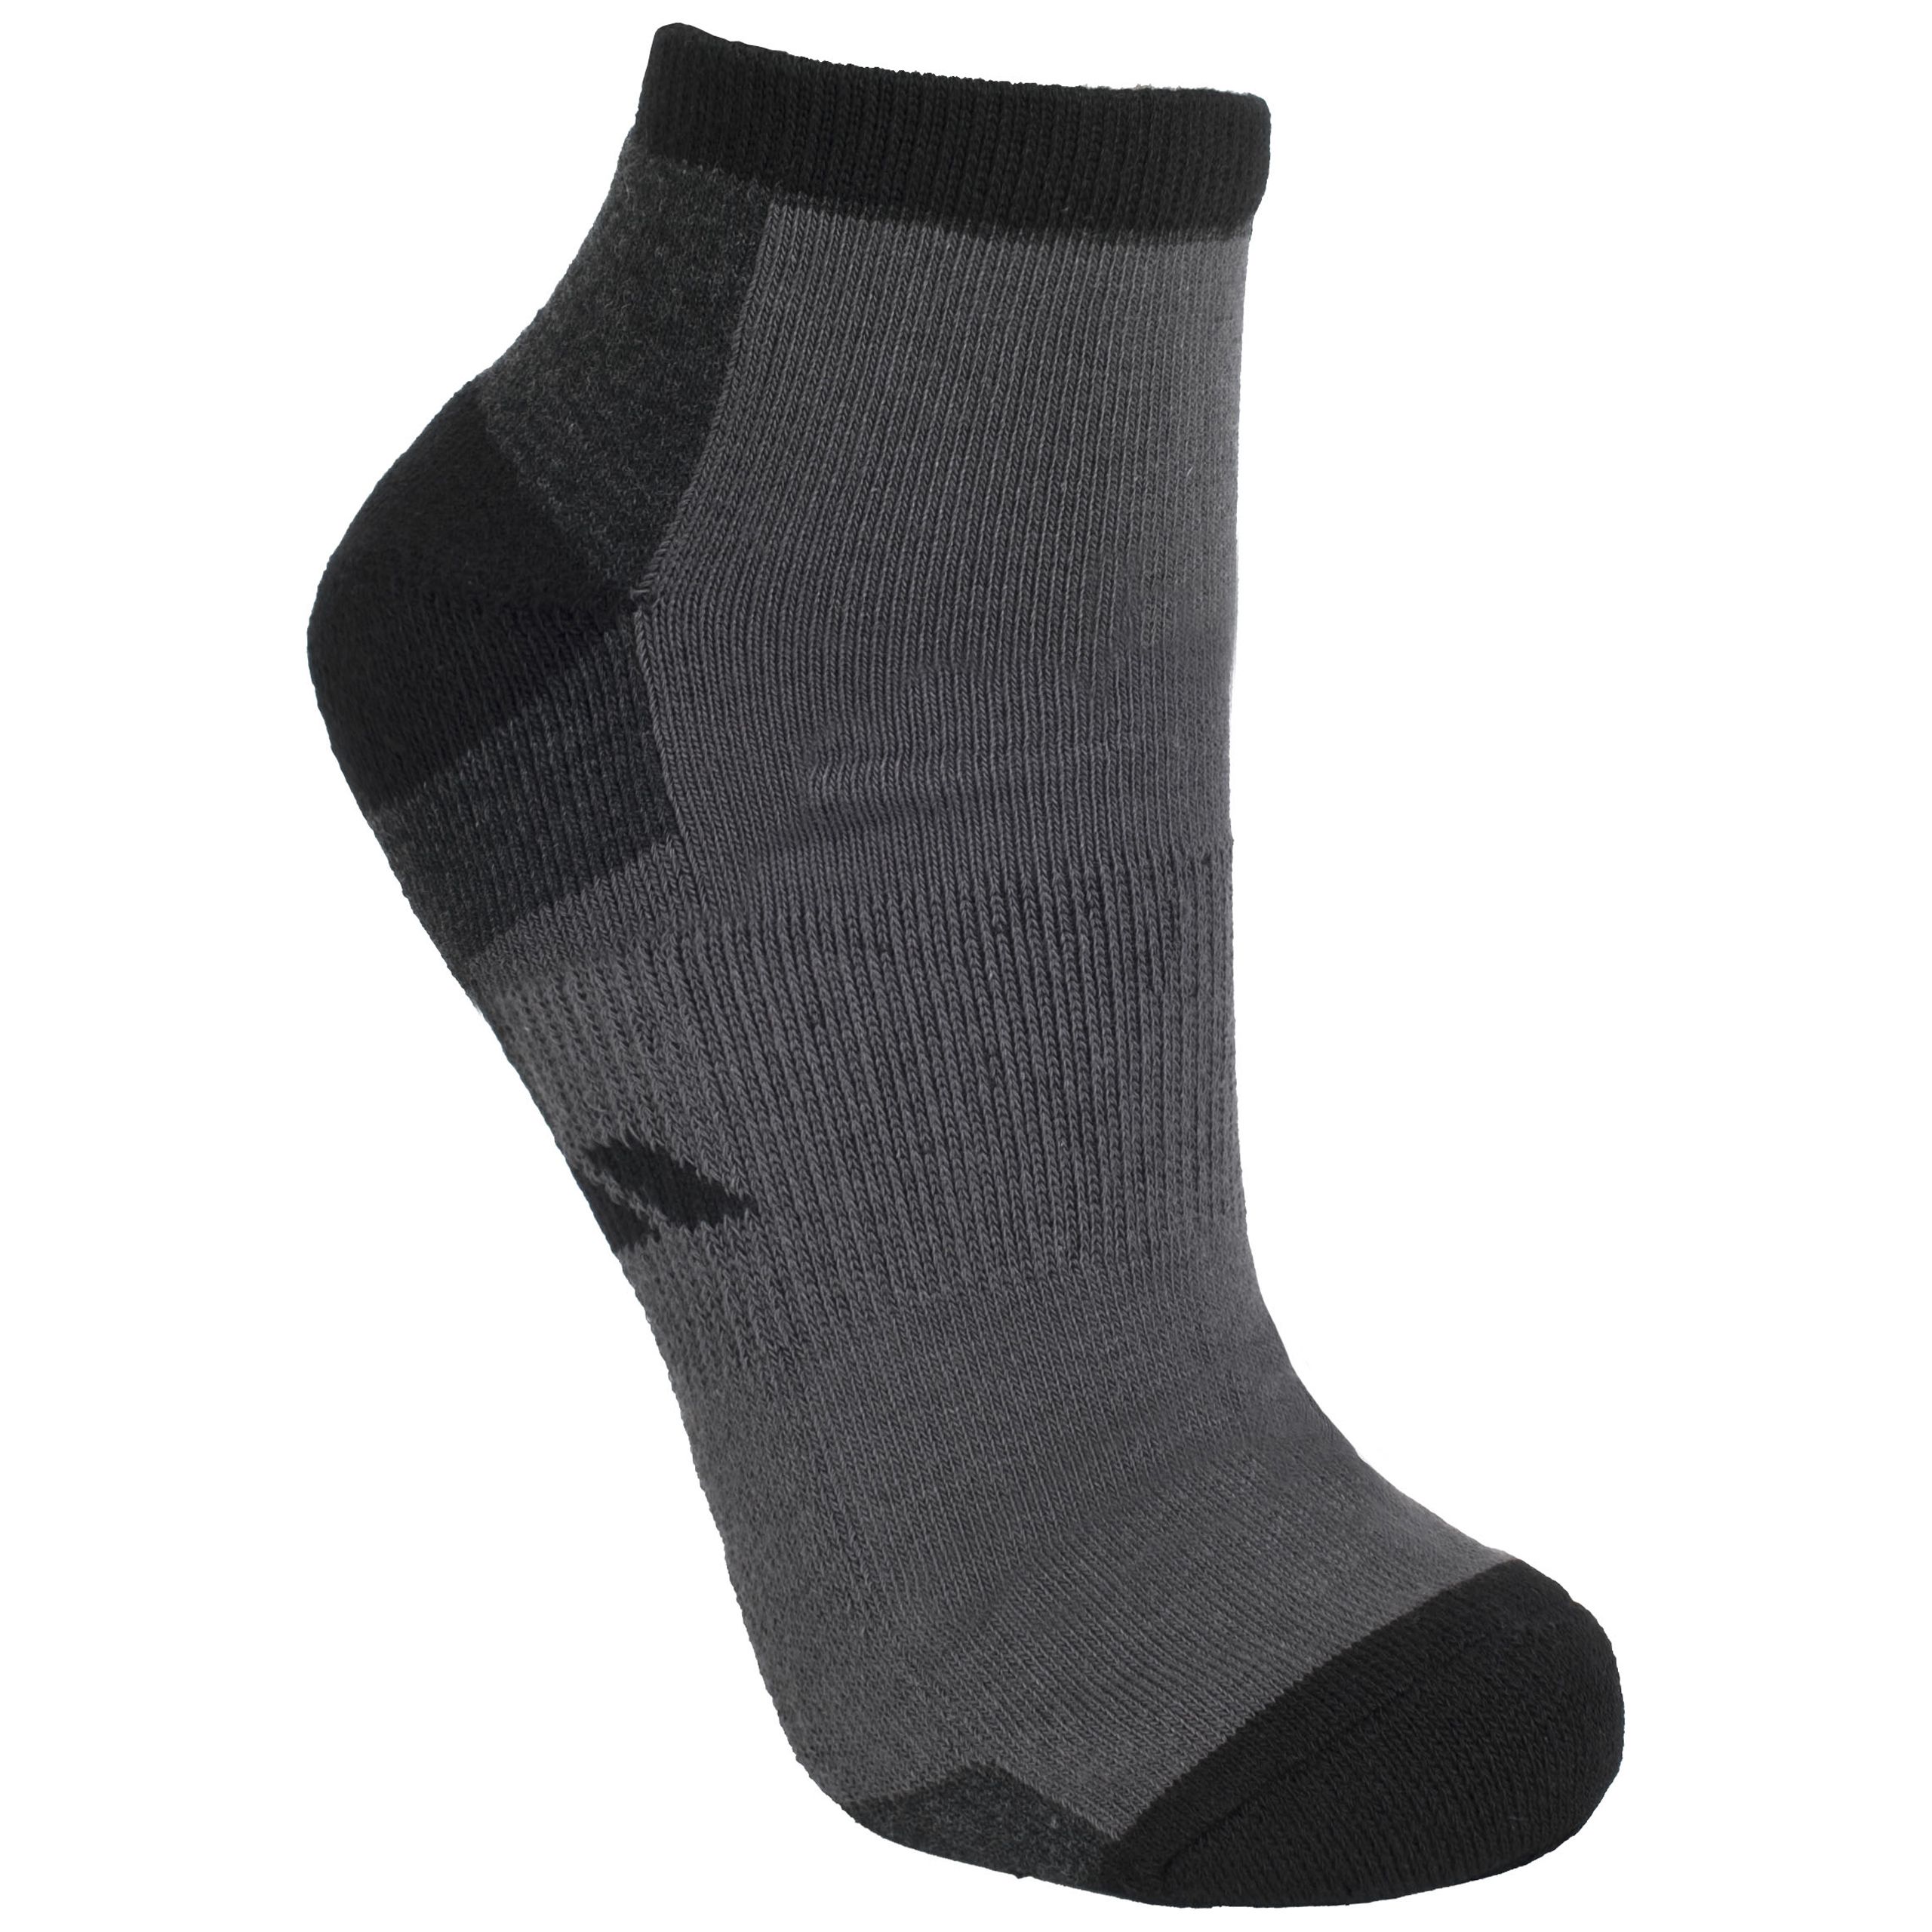 Inclined Mens Trainer Socks